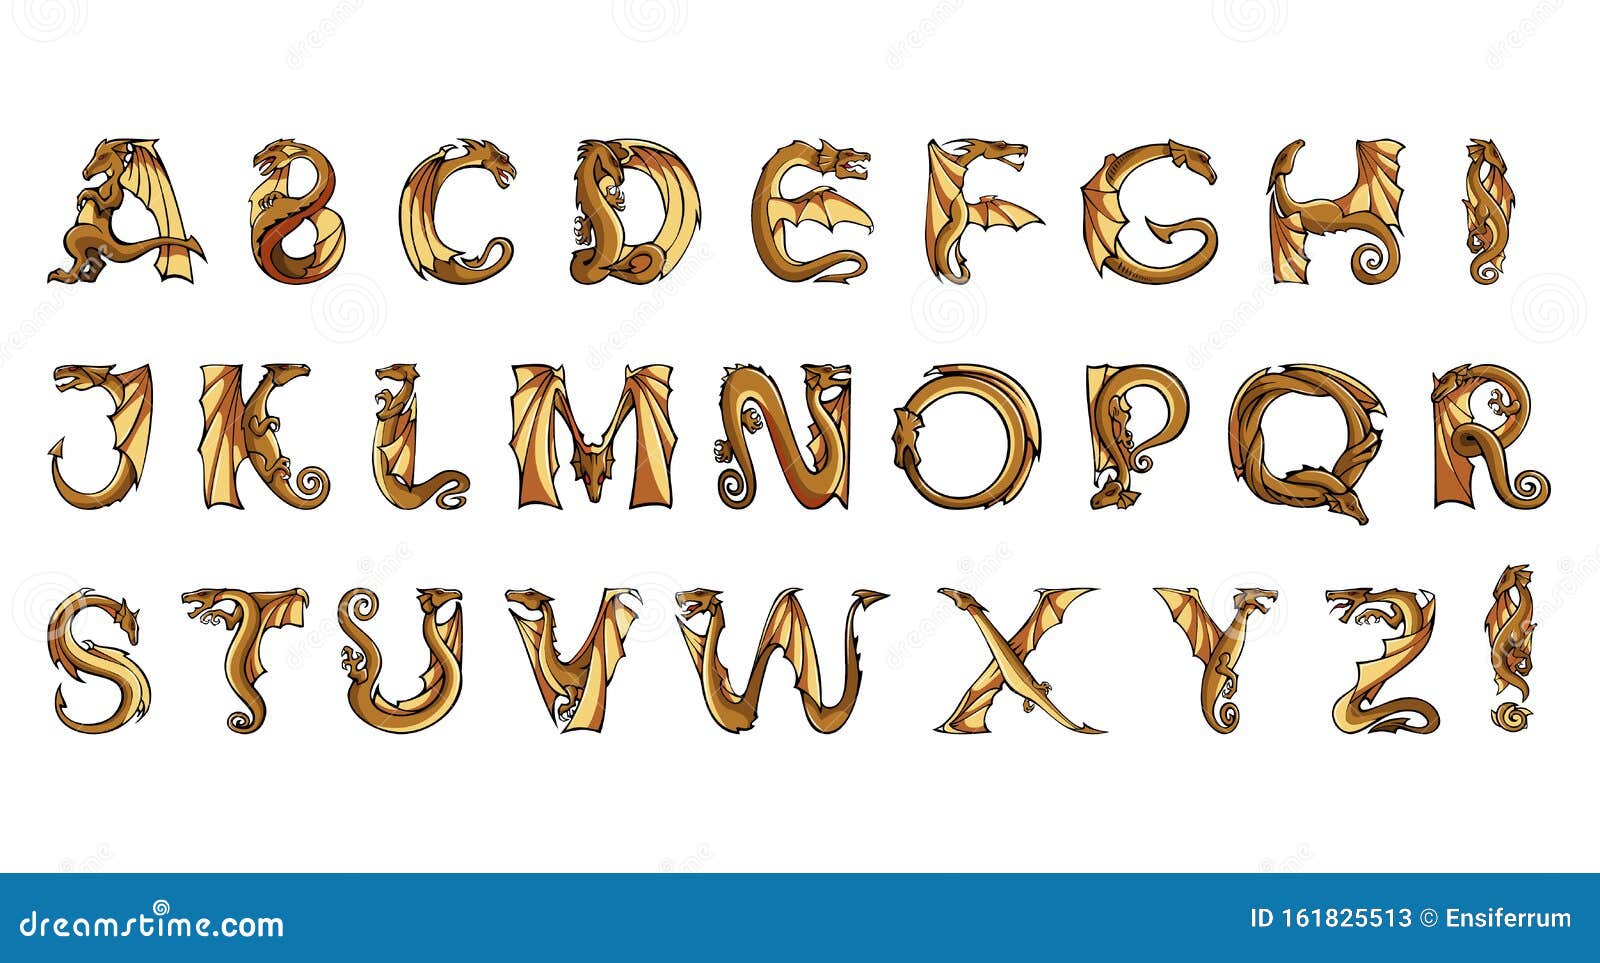 dragon alphabet font download